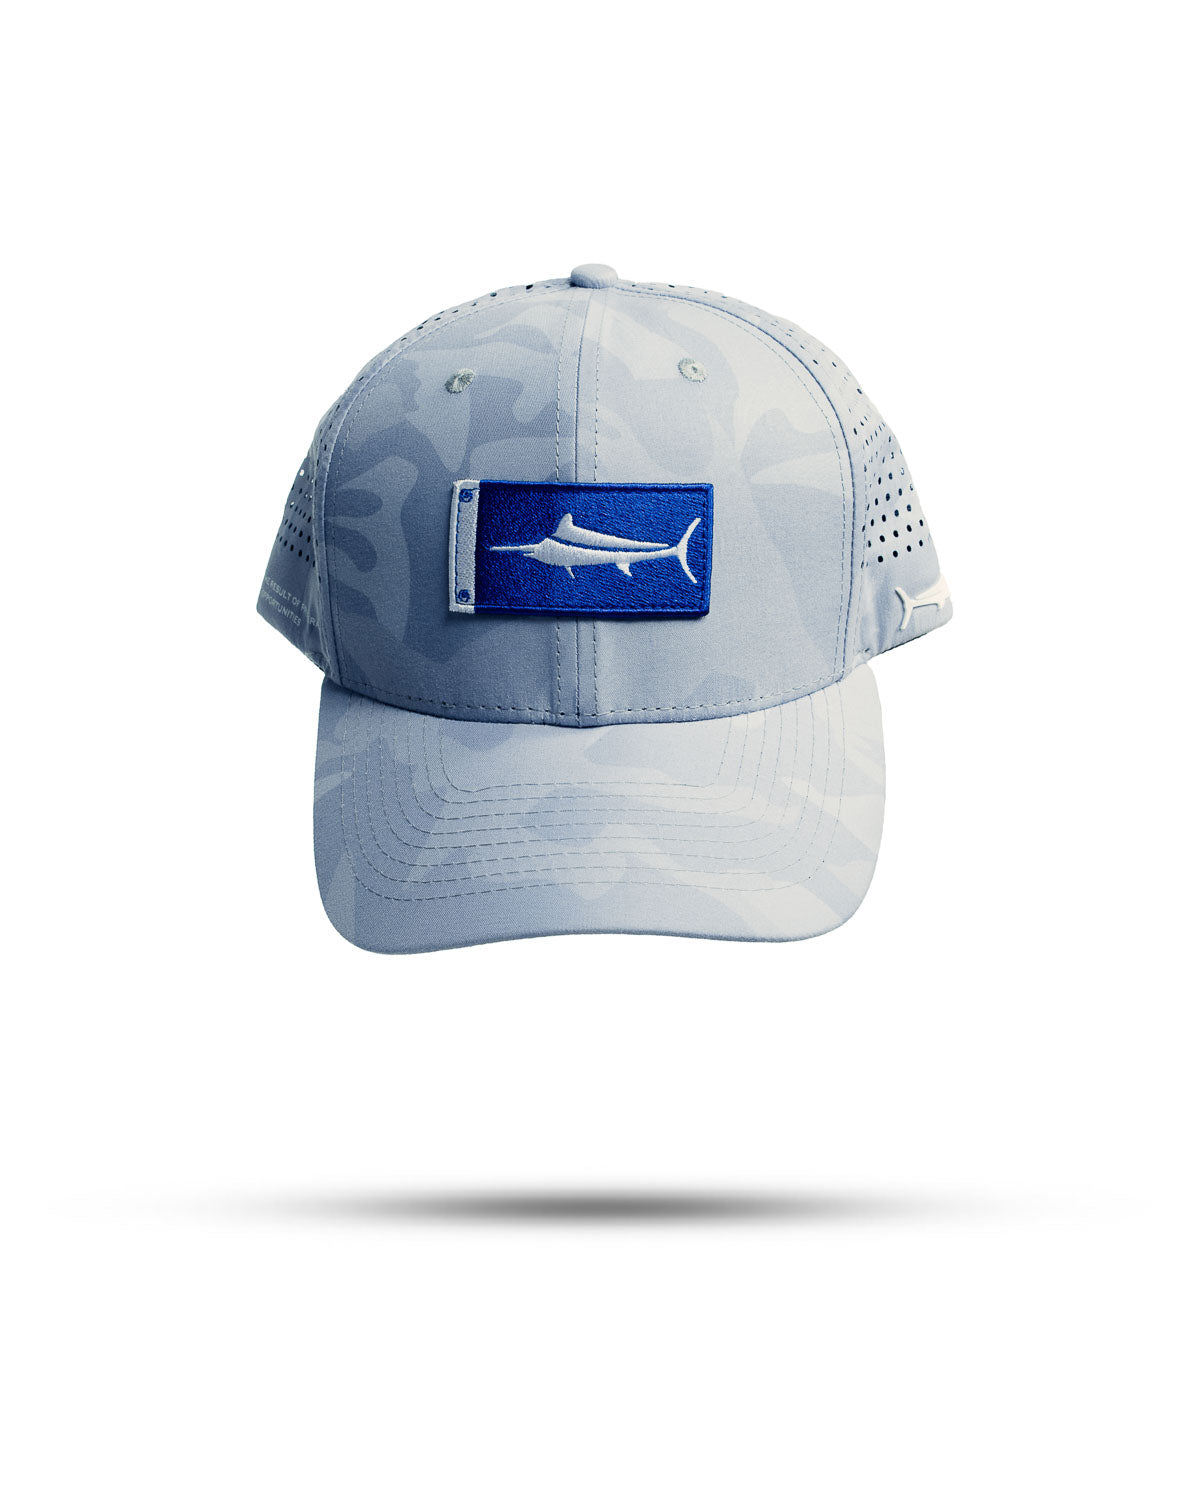 Fishing Hats & Visors  Performance Fishing Headwear – Billfish Gear  Australia